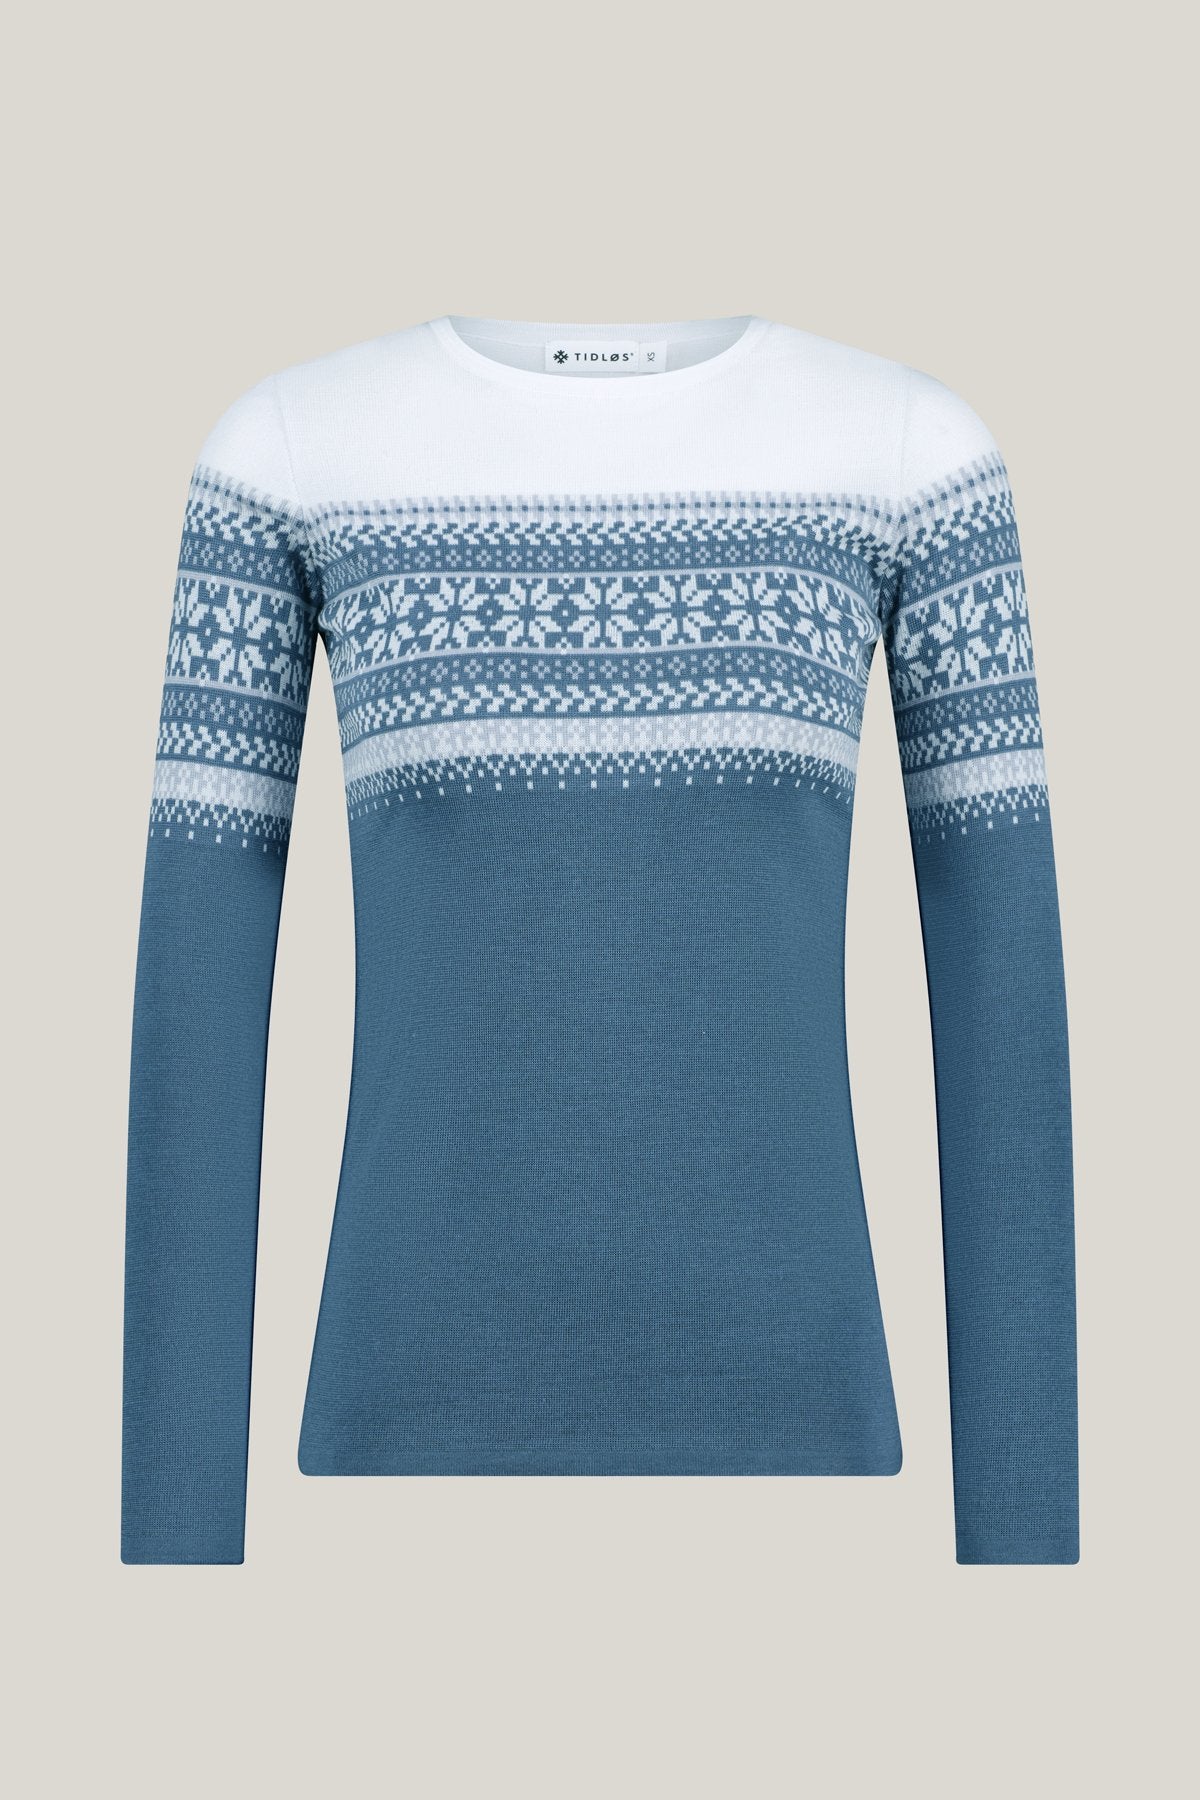 Gray-blue Astrid sweater made of Merino &amp; Tencel from Tidløs